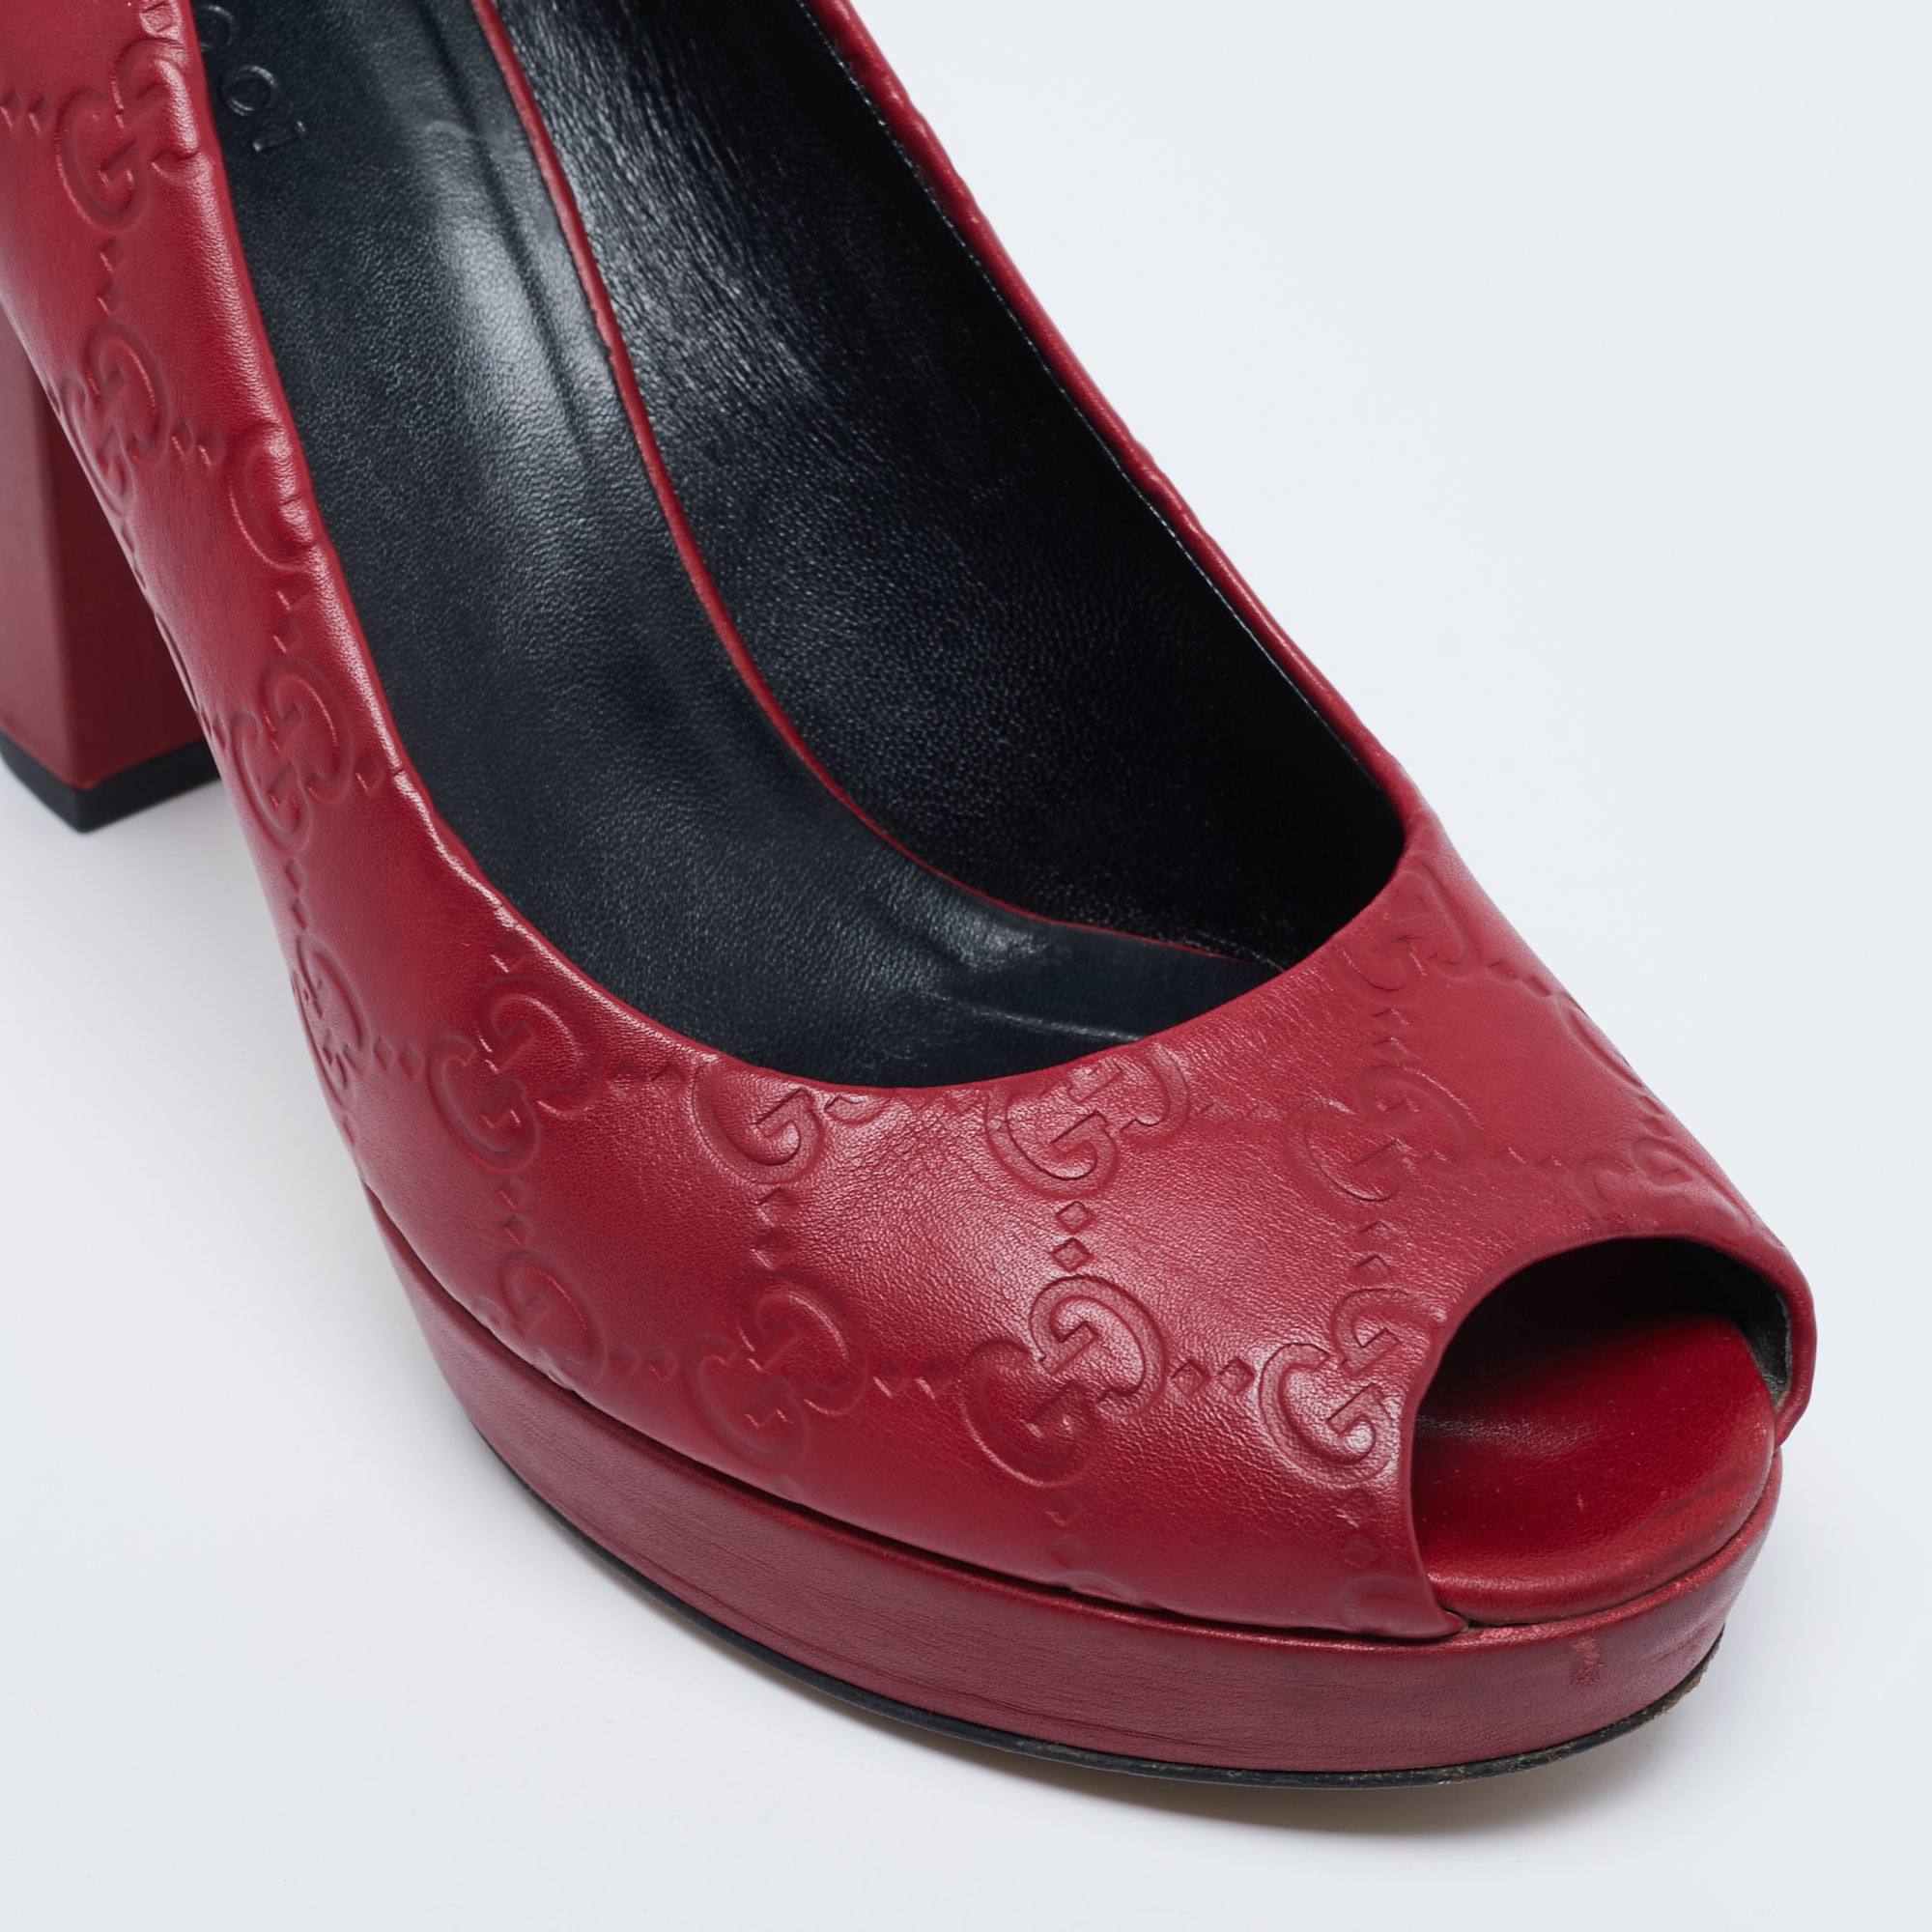 Gucci Burgundy Guccissima Leather Peep Toe Platform Pumps Size 39.5